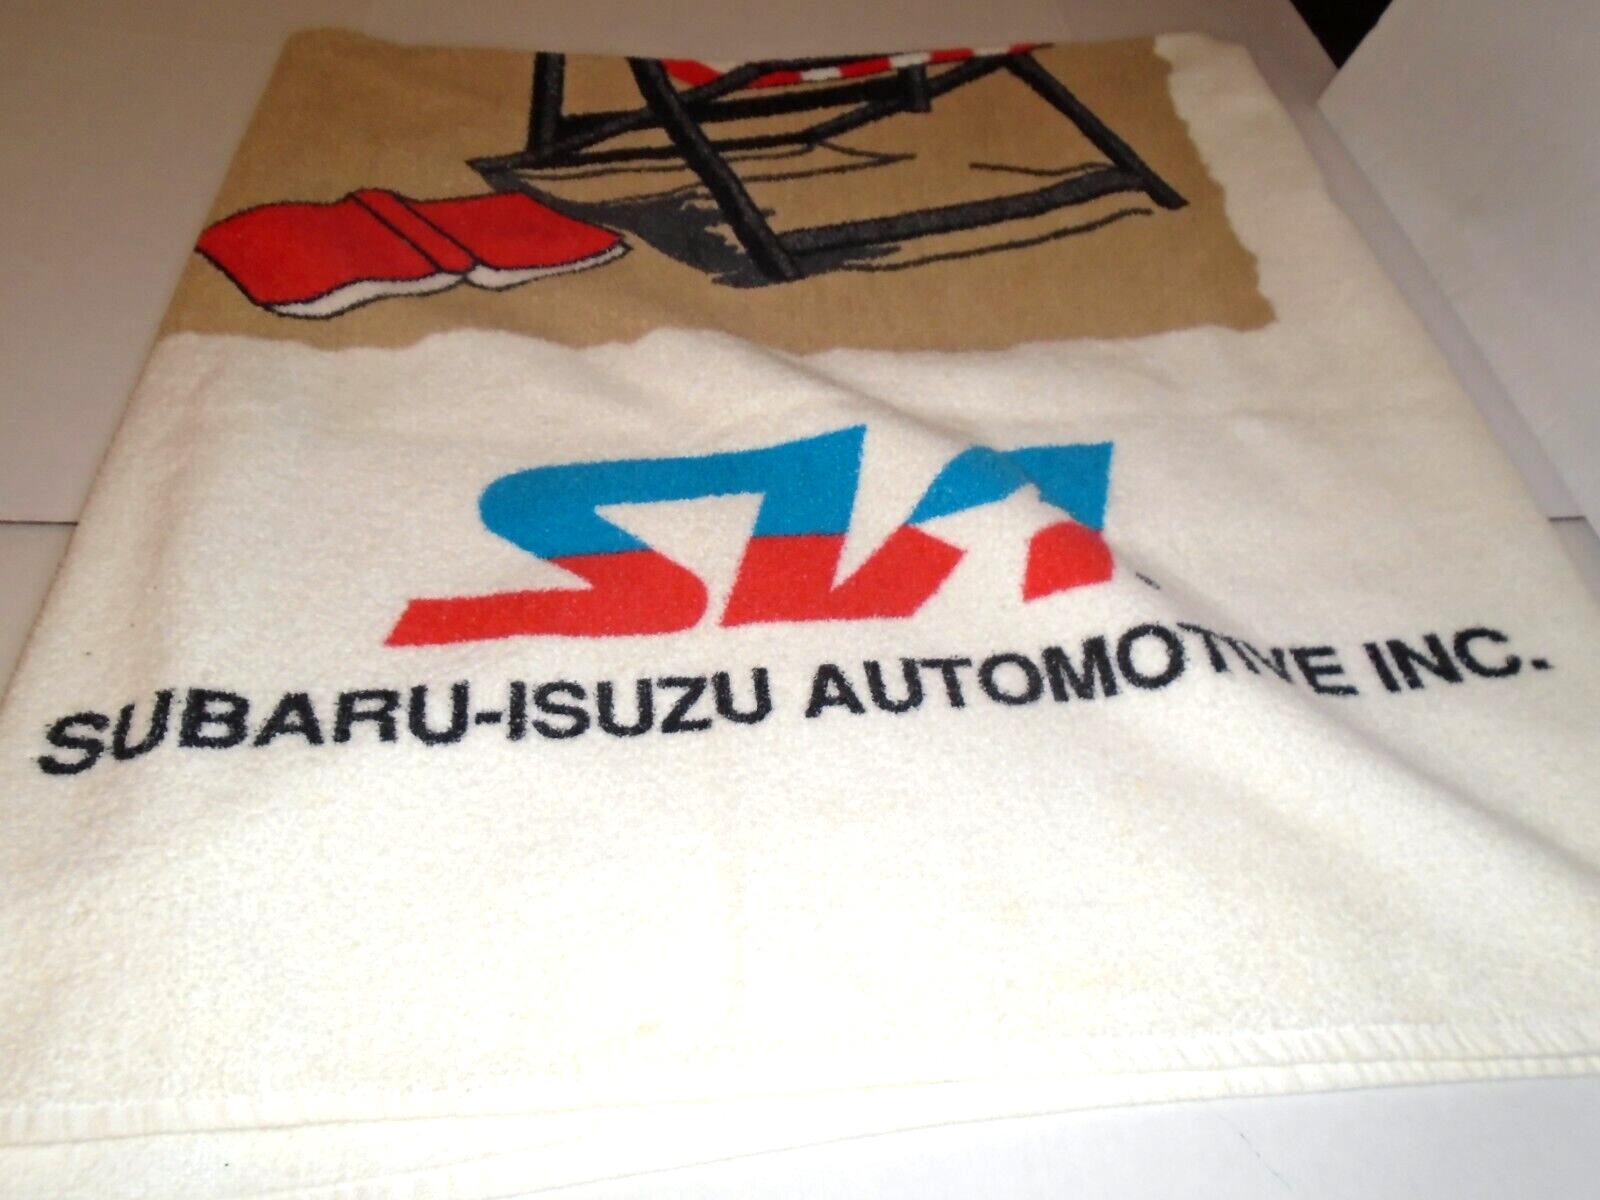 SUBARU - ISUZU AUTOMOTIVE INC. PROMOTIONAL PROMO LARGE COLLECTIBLE BEACH TOWEL